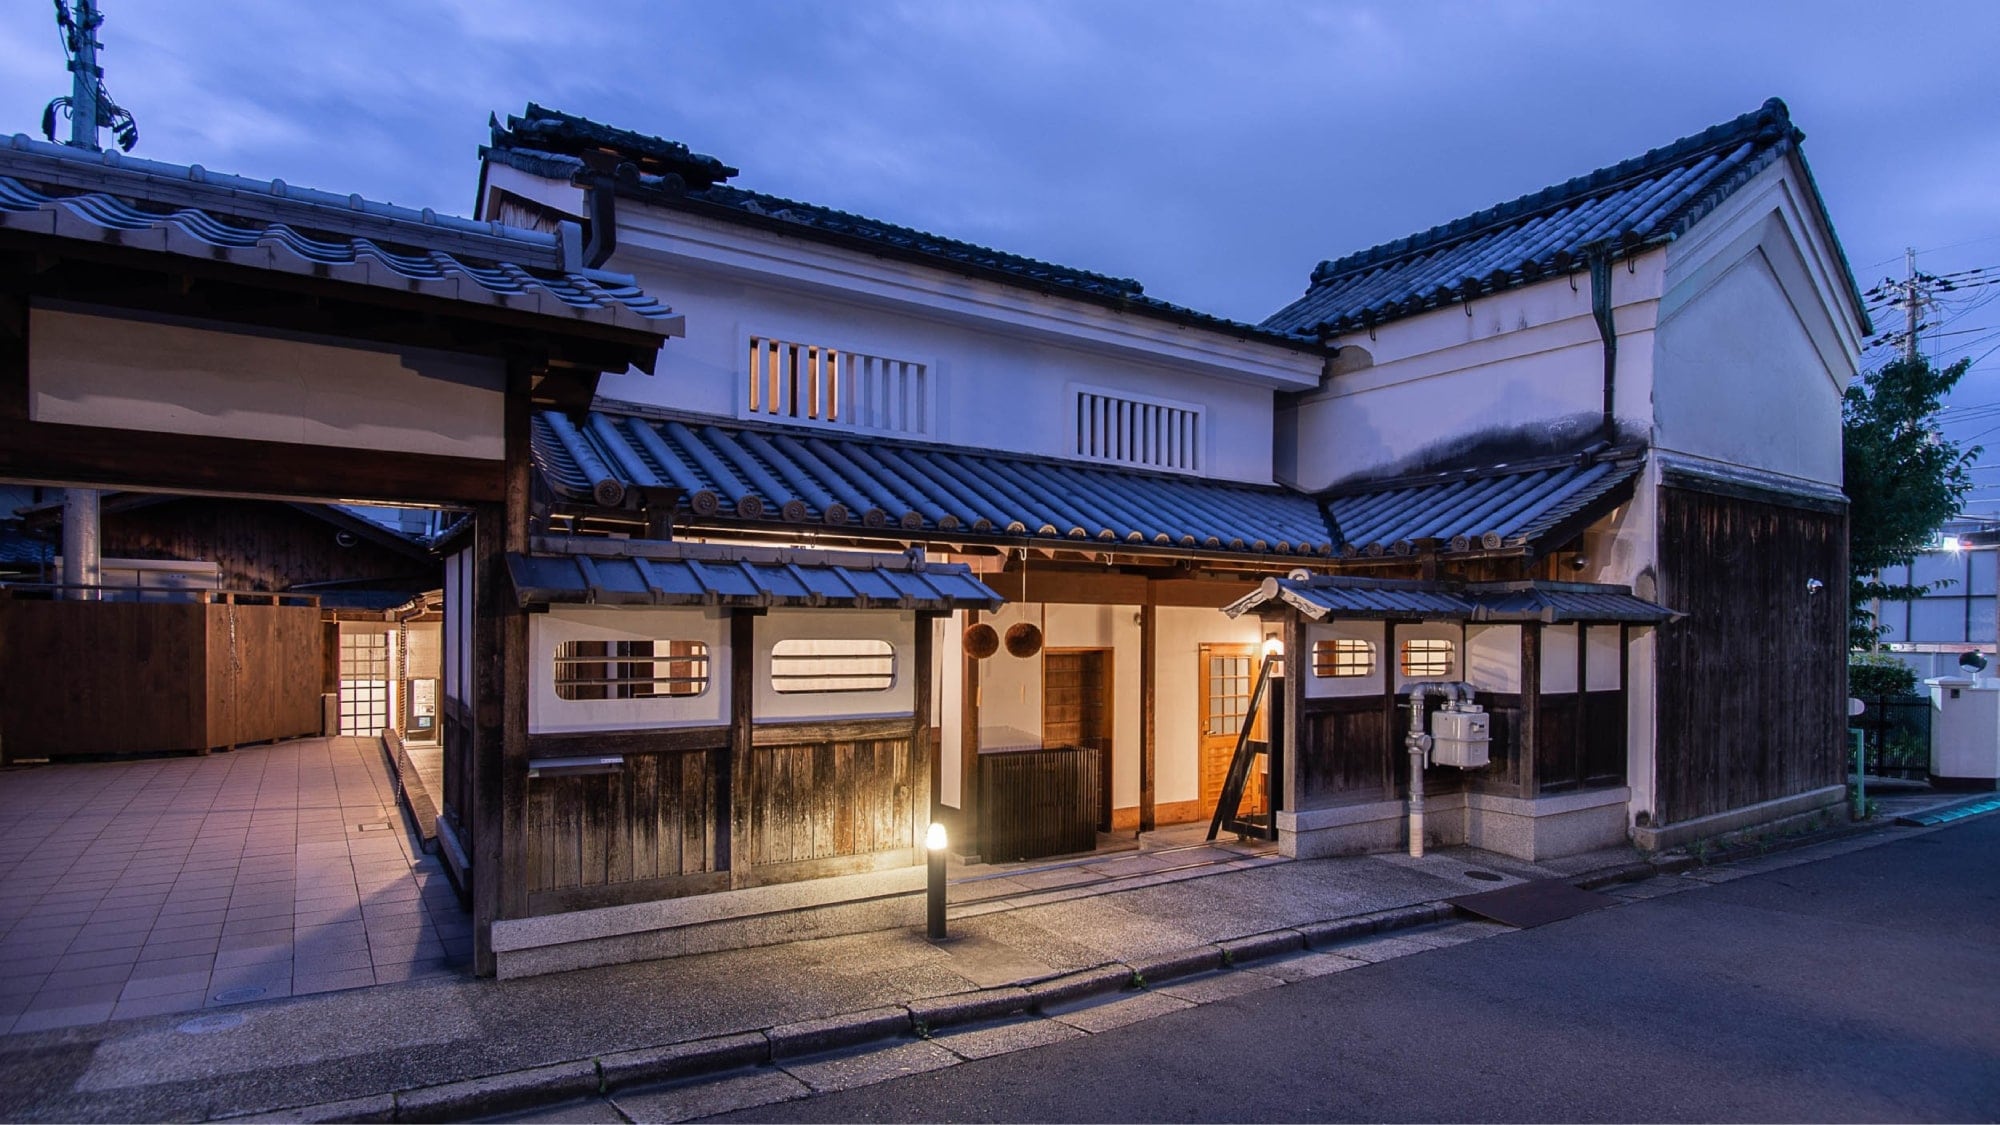 NIPPONIAHOTEL Nara Naramachi is a former sake brewery and residence of Toyosawa Sake Brewery.